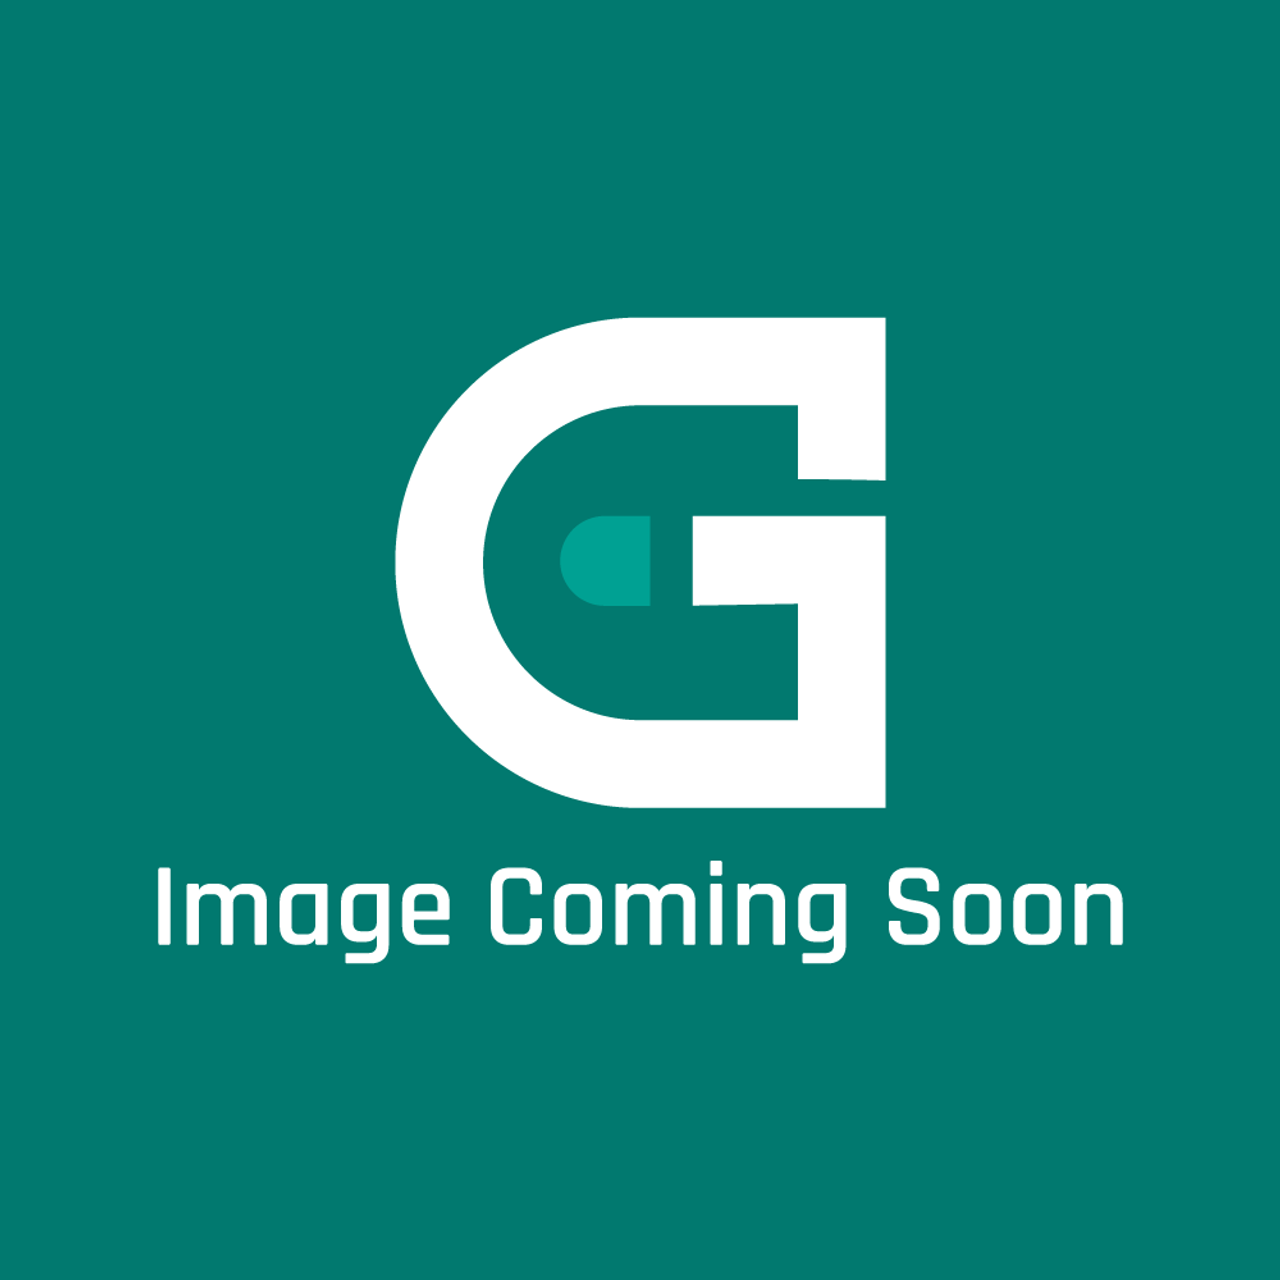 Frigidaire - Electrolux 318186932 Lp Conversion Kit - Image Coming Soon!